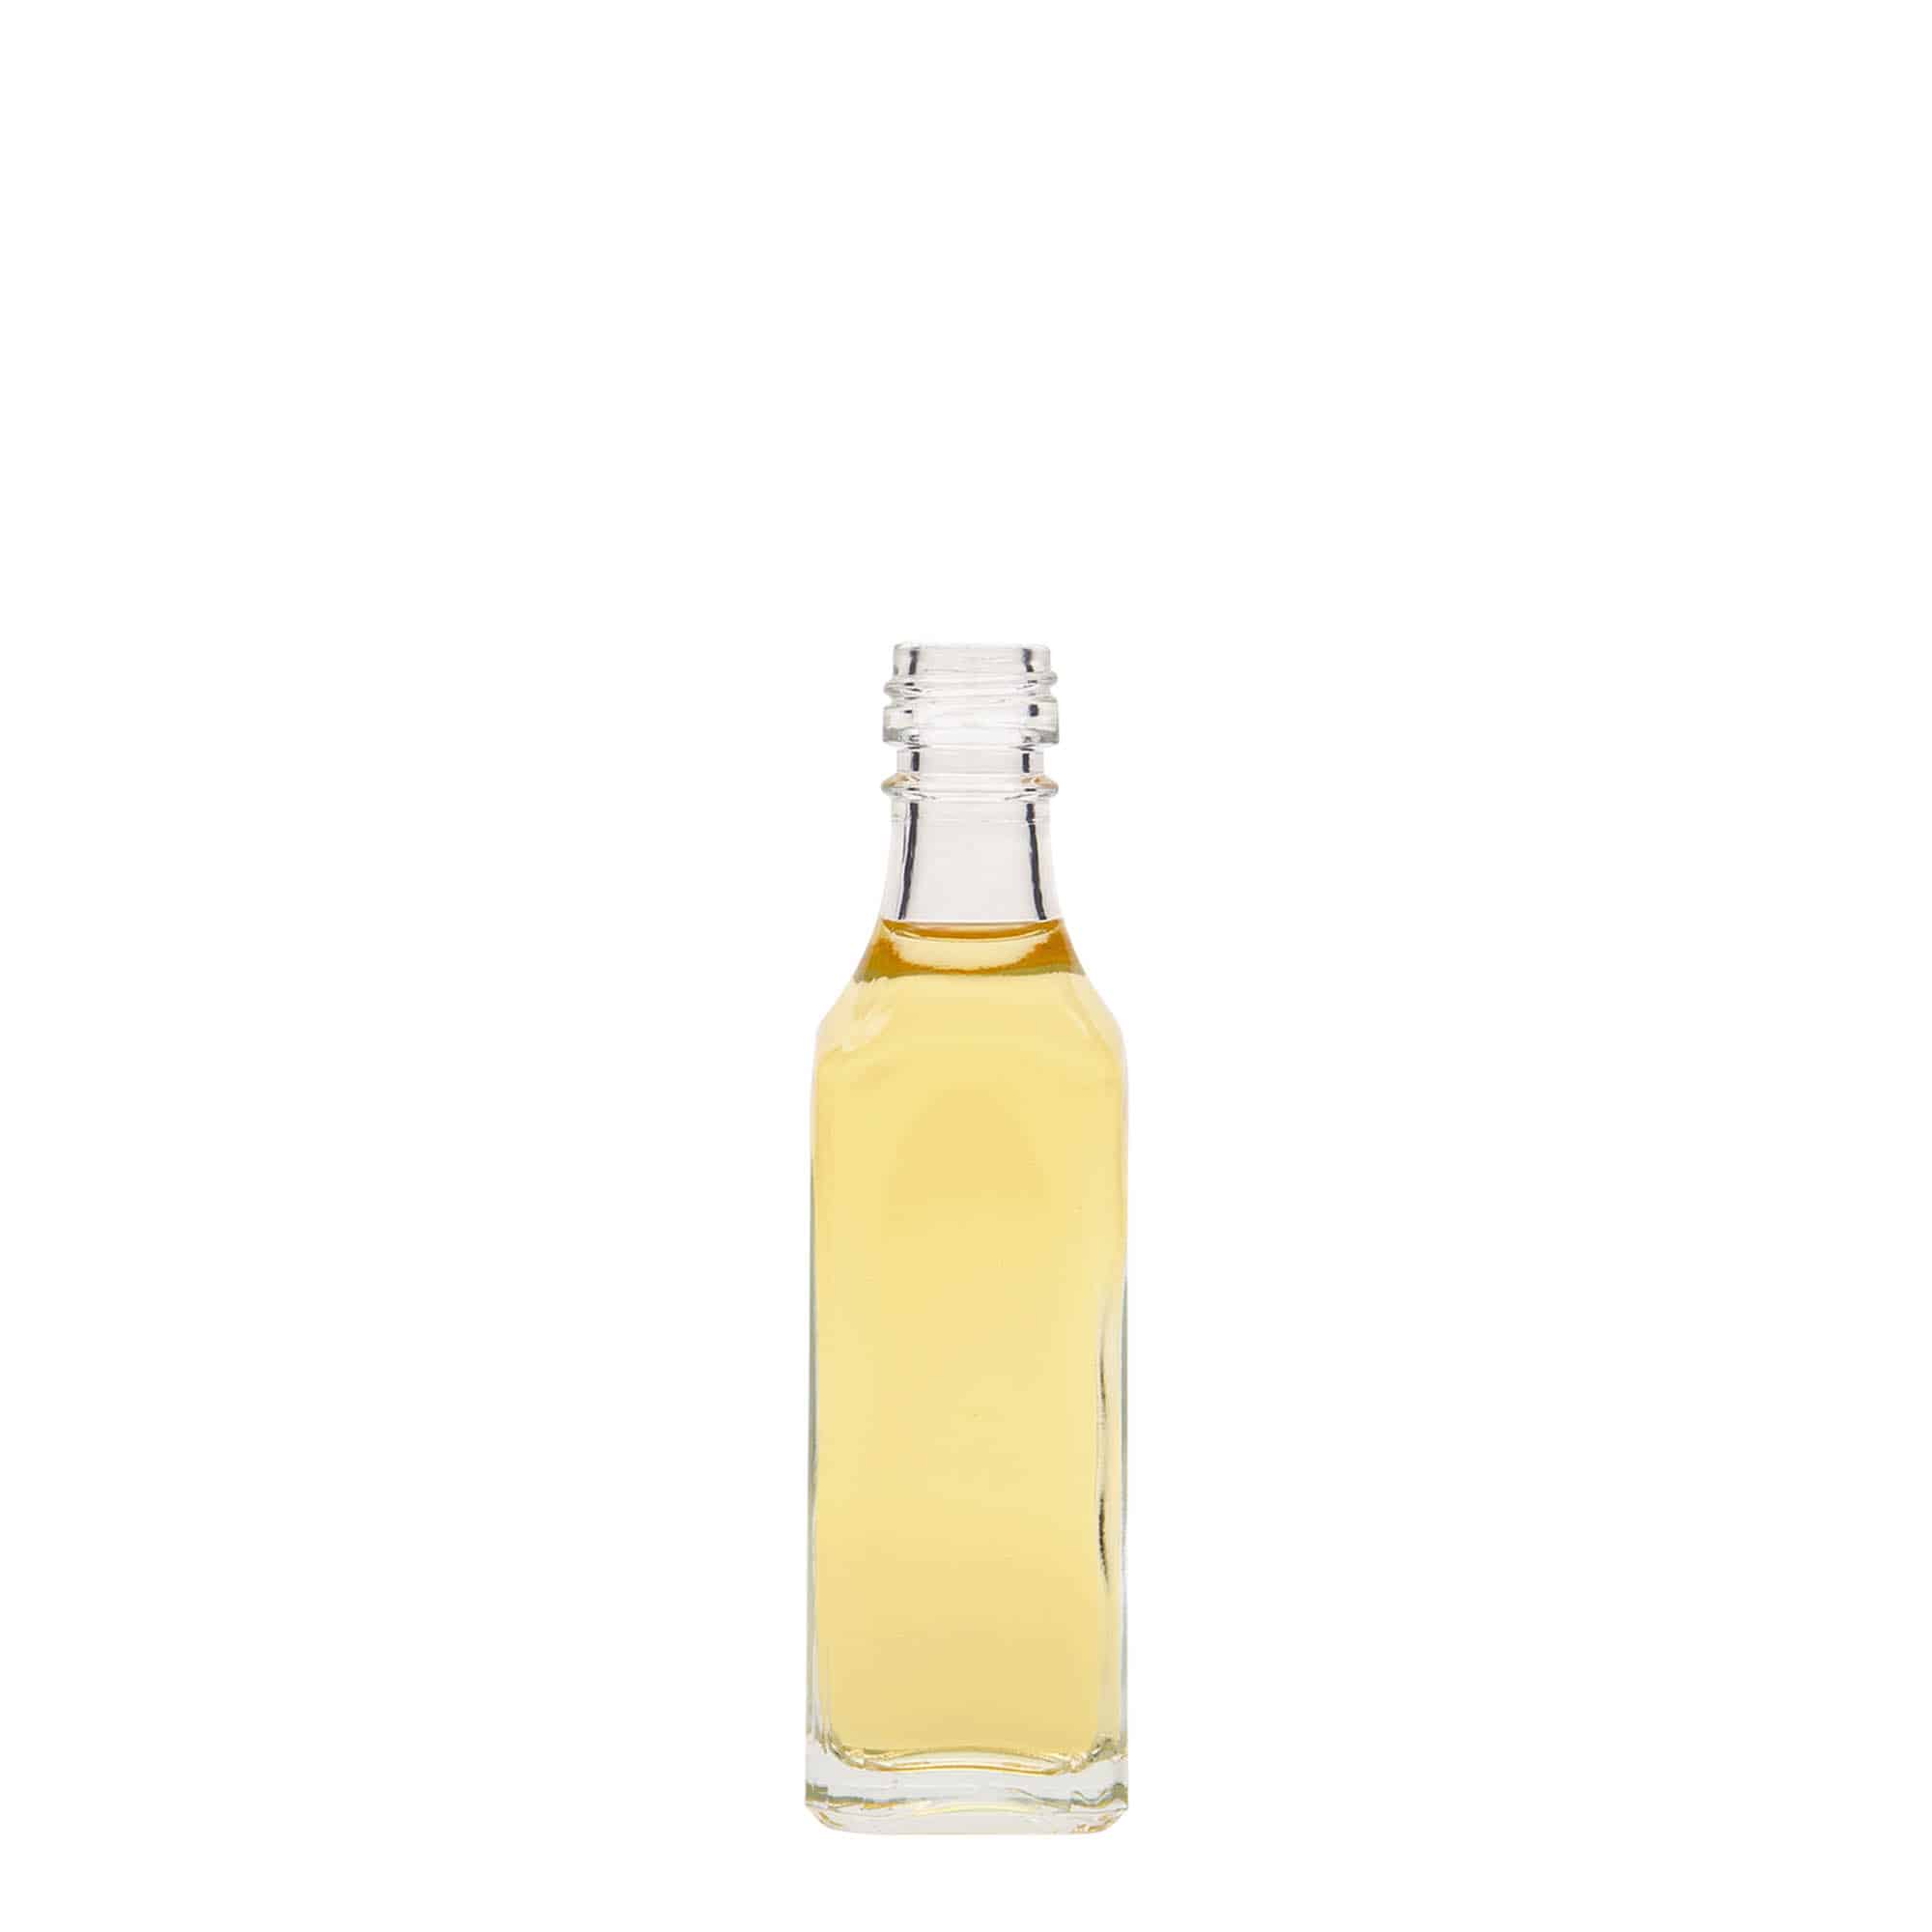 50 ml glass bottle 'Siena', square, closure: PP 18